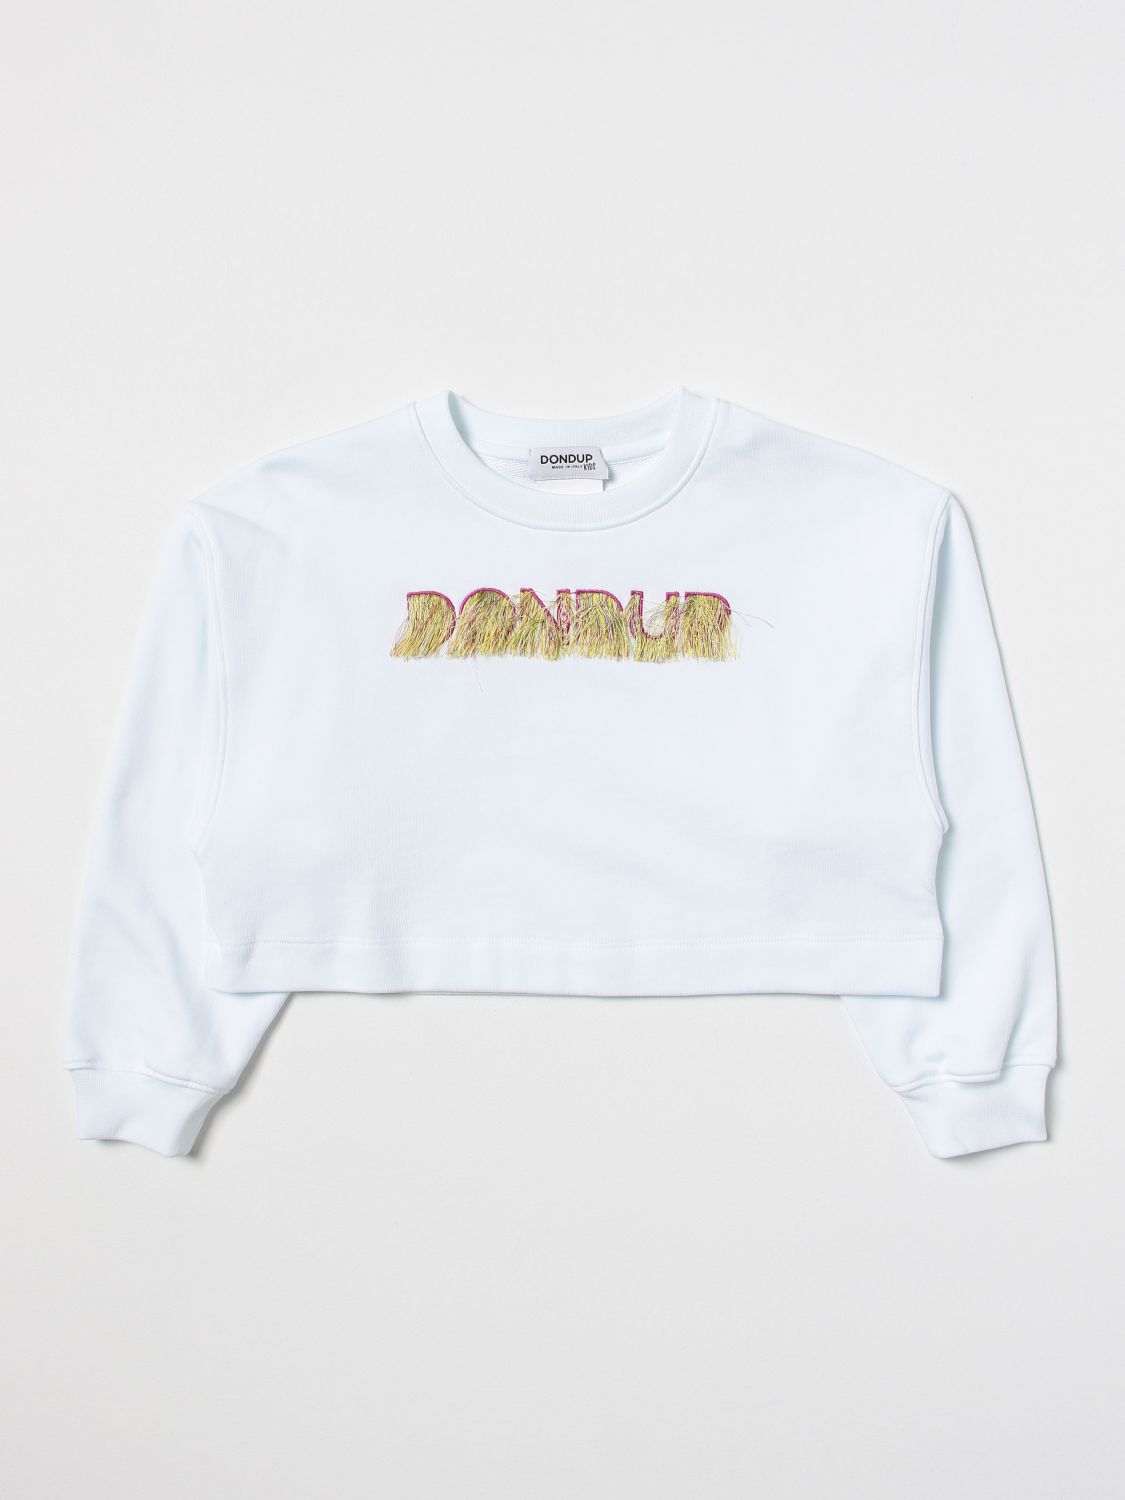 ernstig bespotten Modieus DONDUP: sweater for girls - White | Dondup sweater DFFE118CFF21BD001 online  on GIGLIO.COM